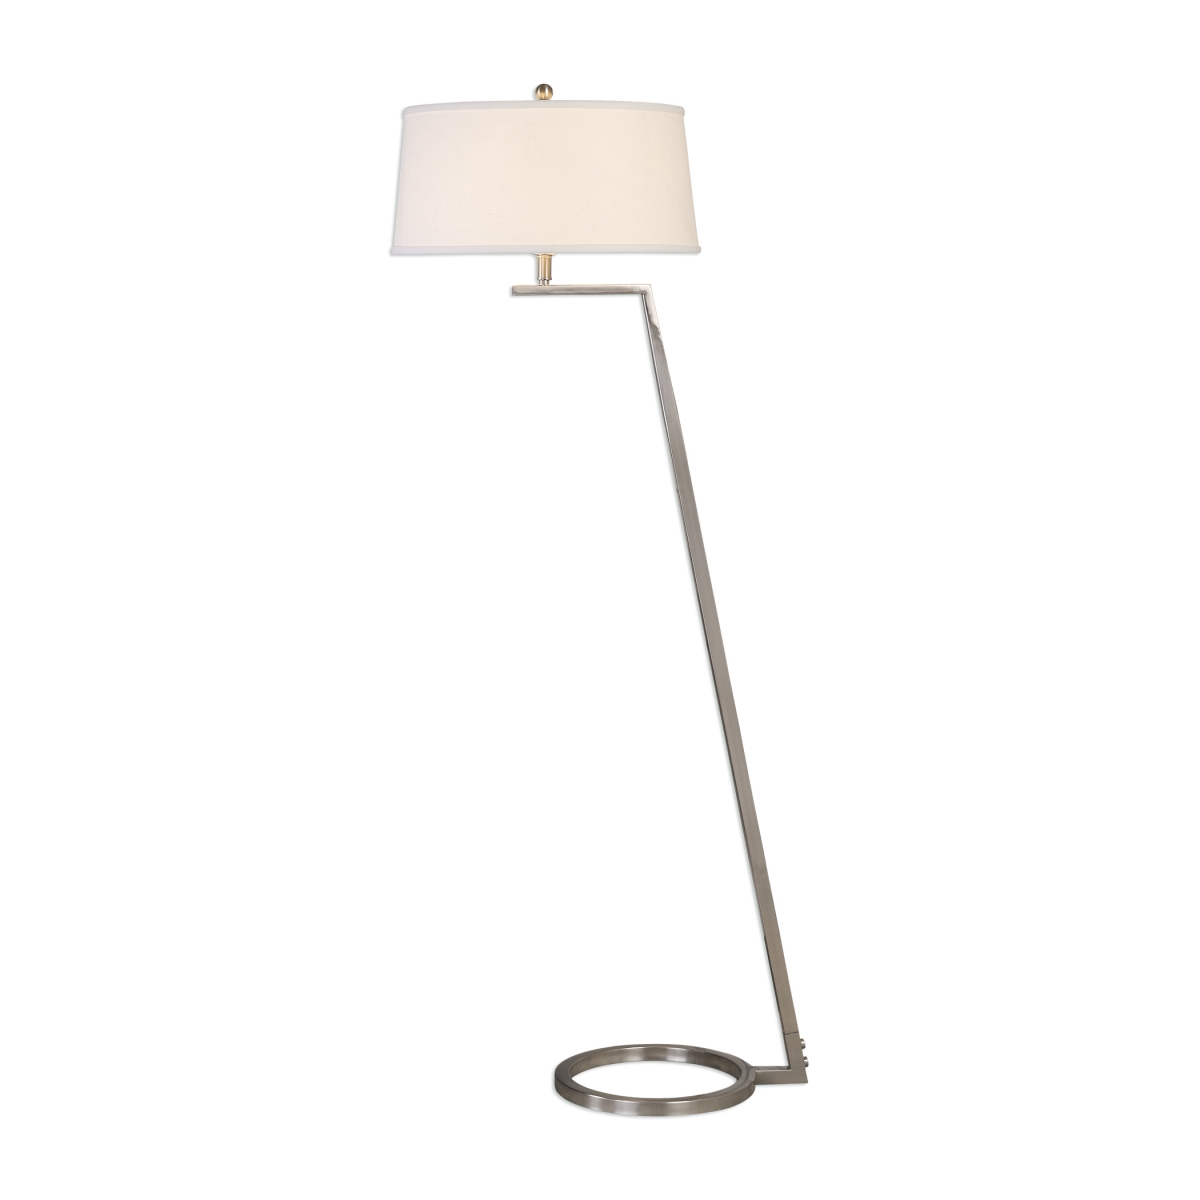 Picture of 212 Main 28108 Ordino Modern Nickel Floor Lamp